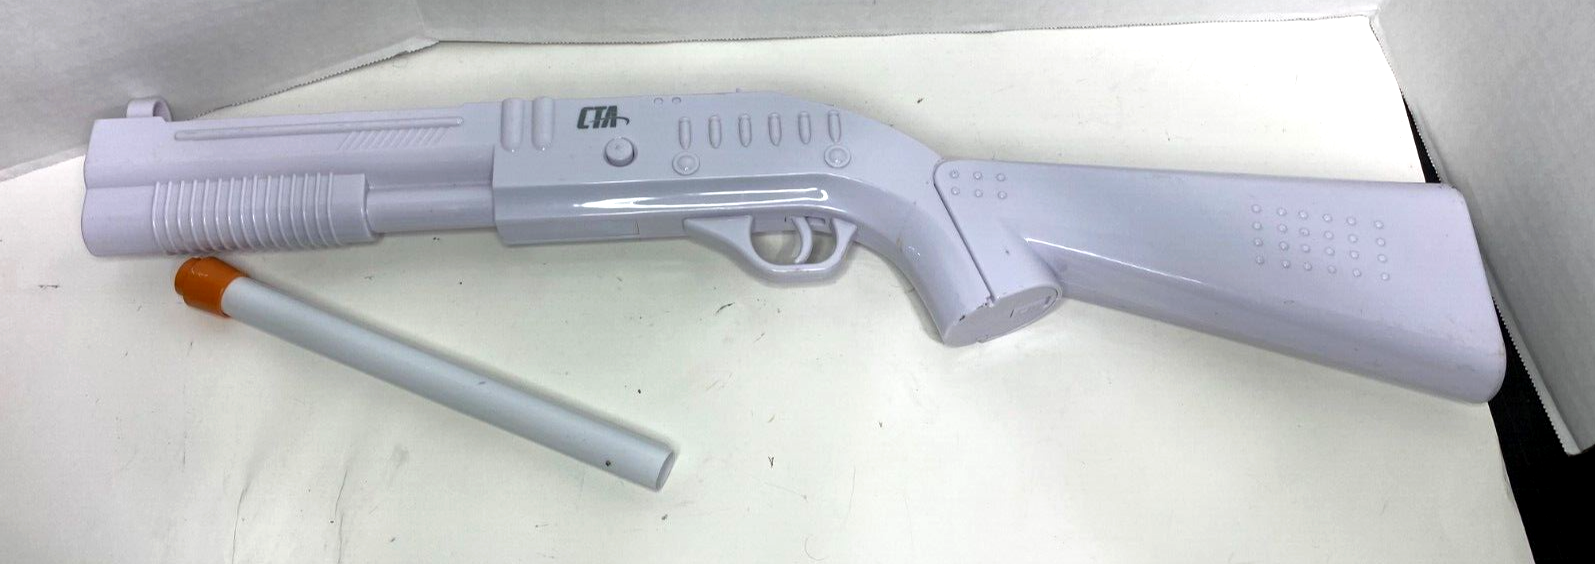 CTA Sure Shot Hunting Shotgun Rifle Controller Attachment fr Nintendo Wii Remote - $38.95